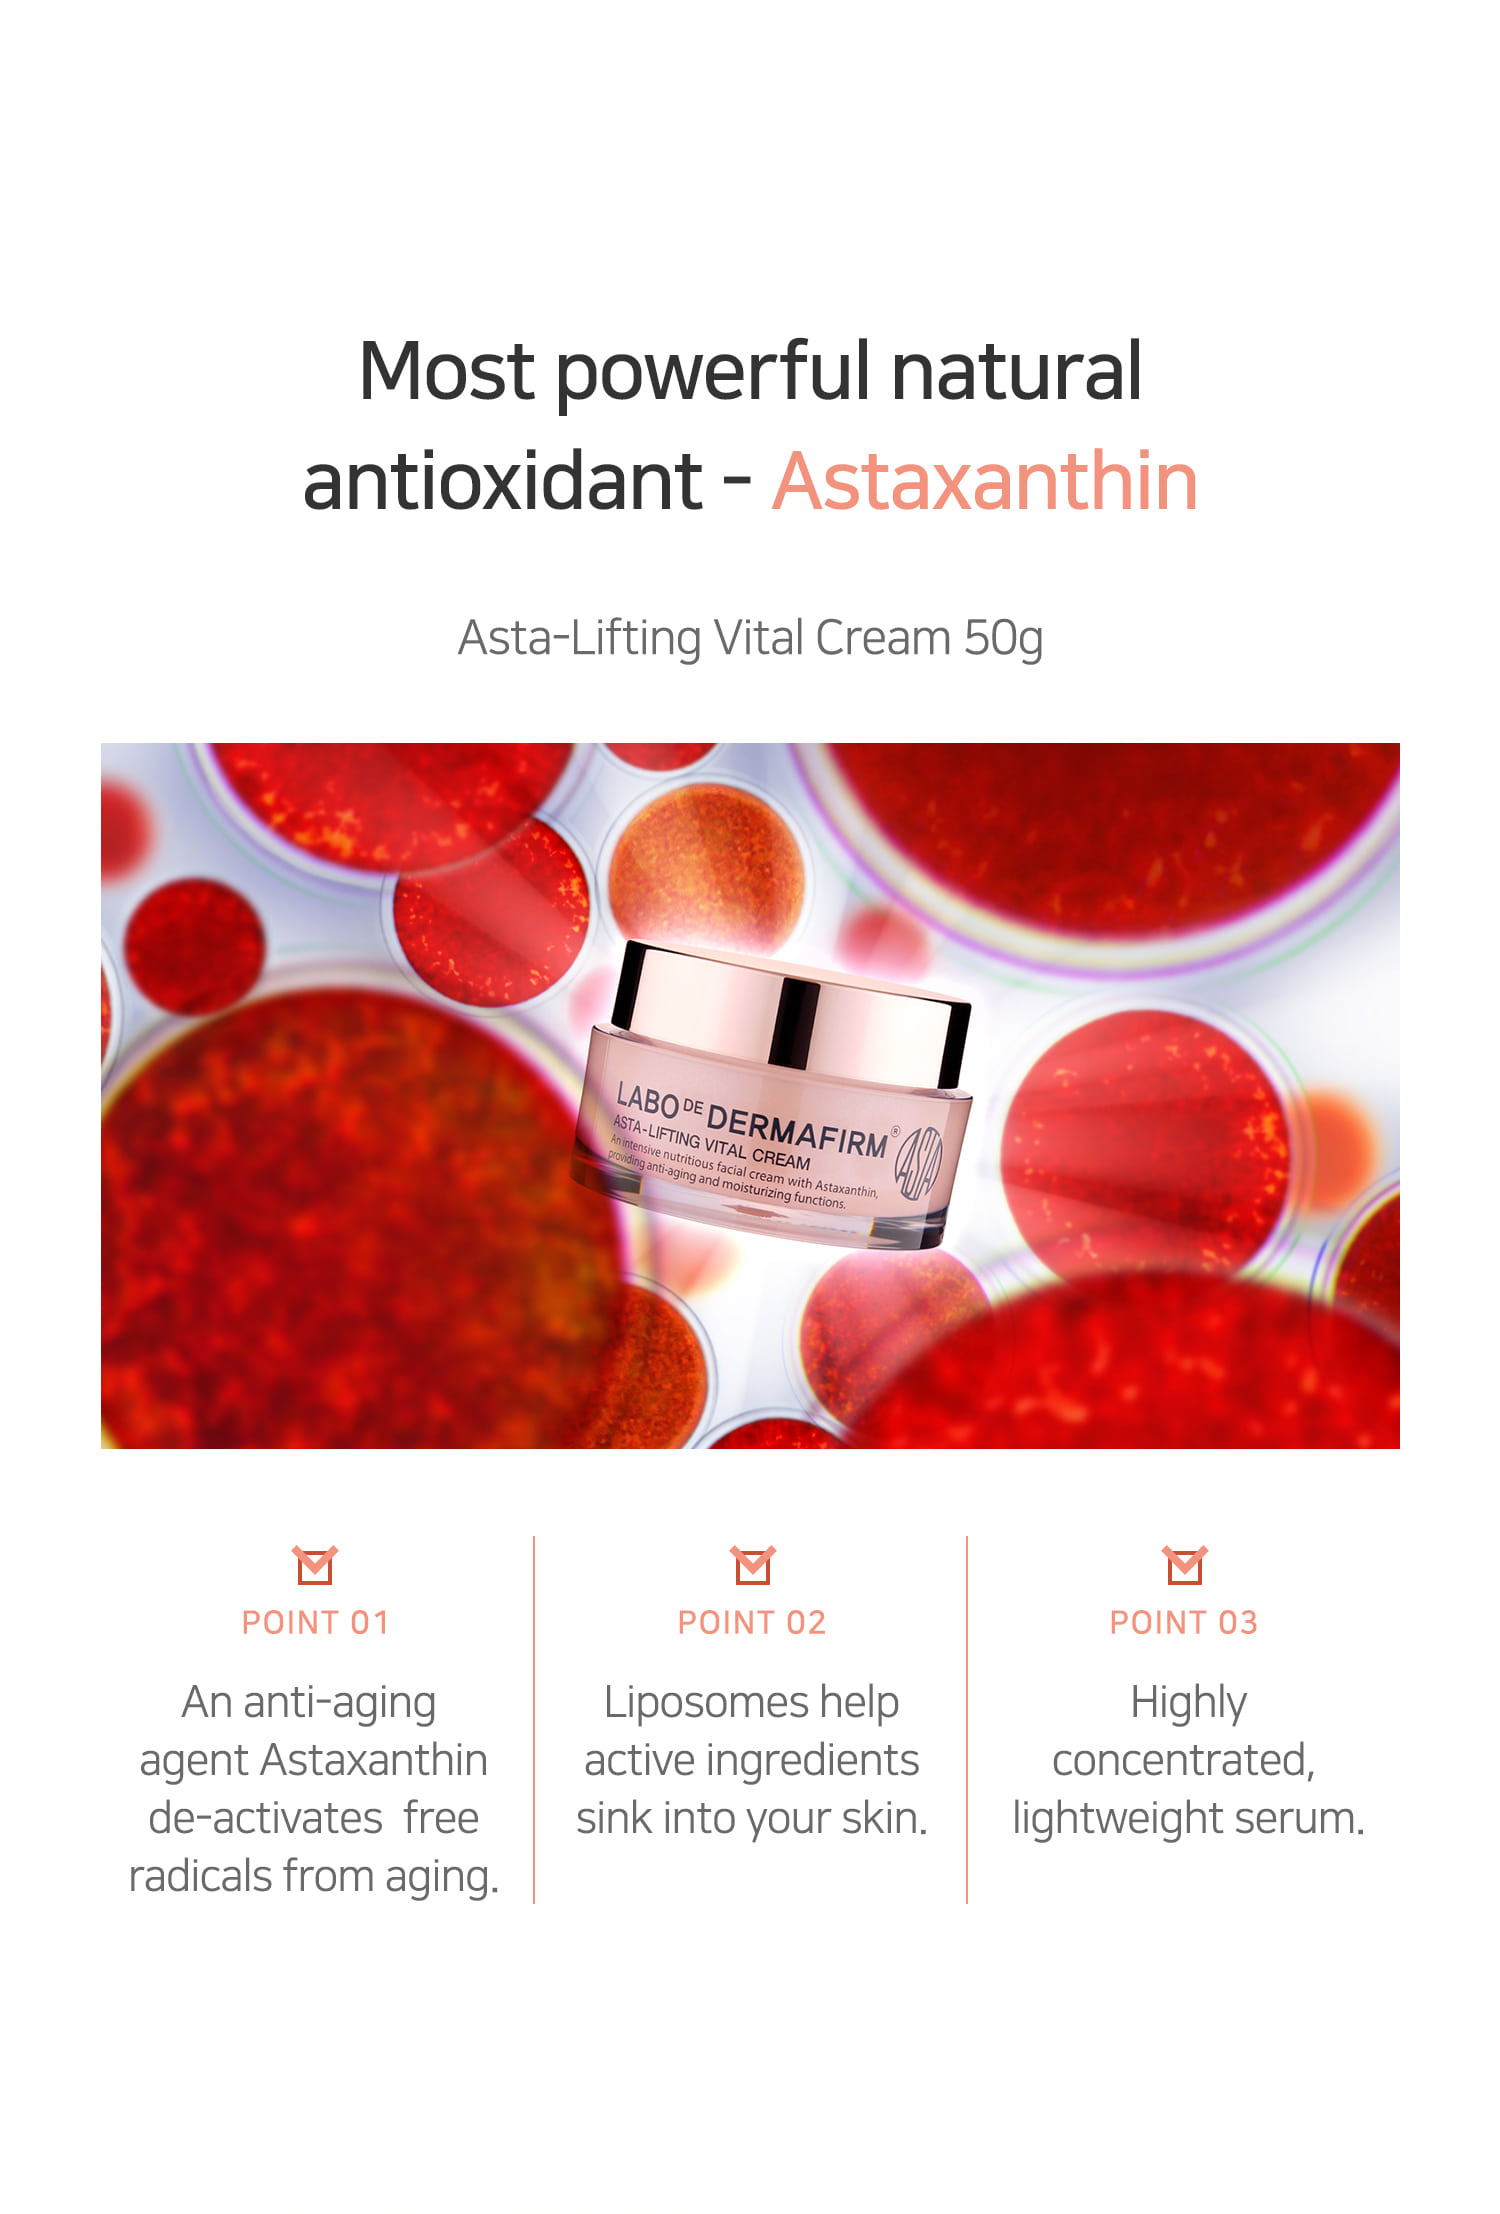 Most powerful natural antioxidant - Astaxanthin